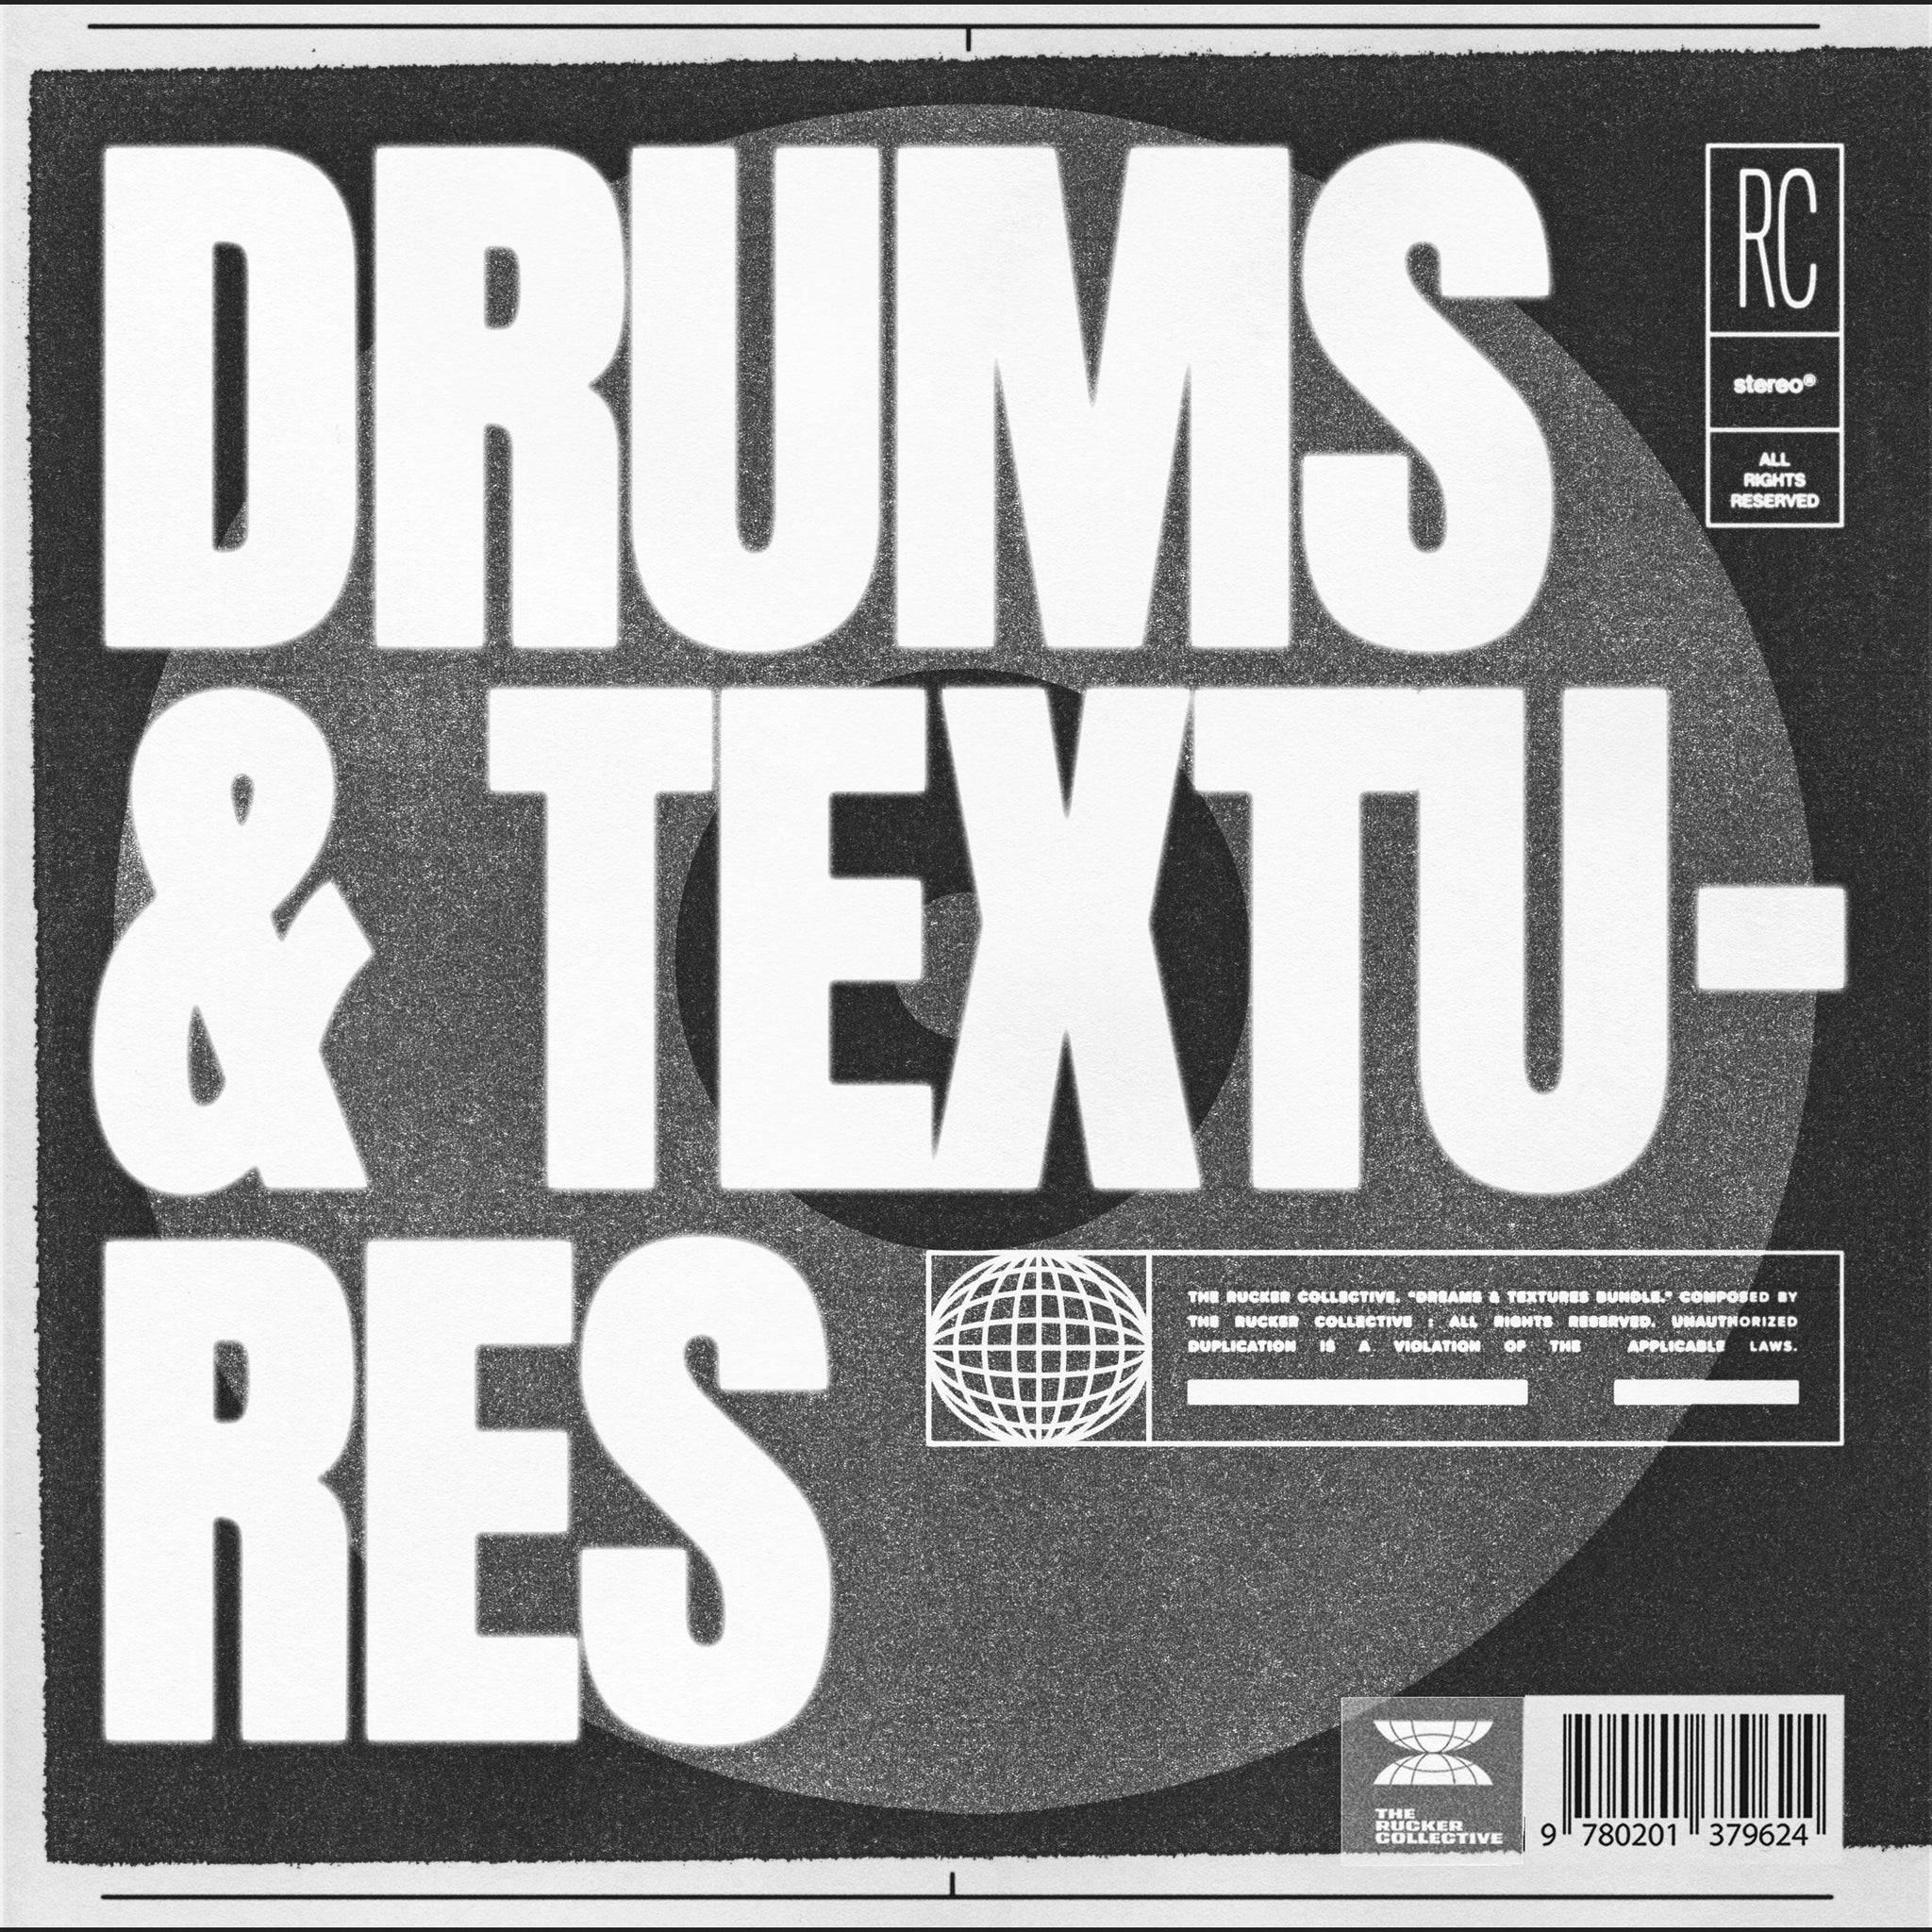 The Rucker Collective - Drums & Textures Bundle